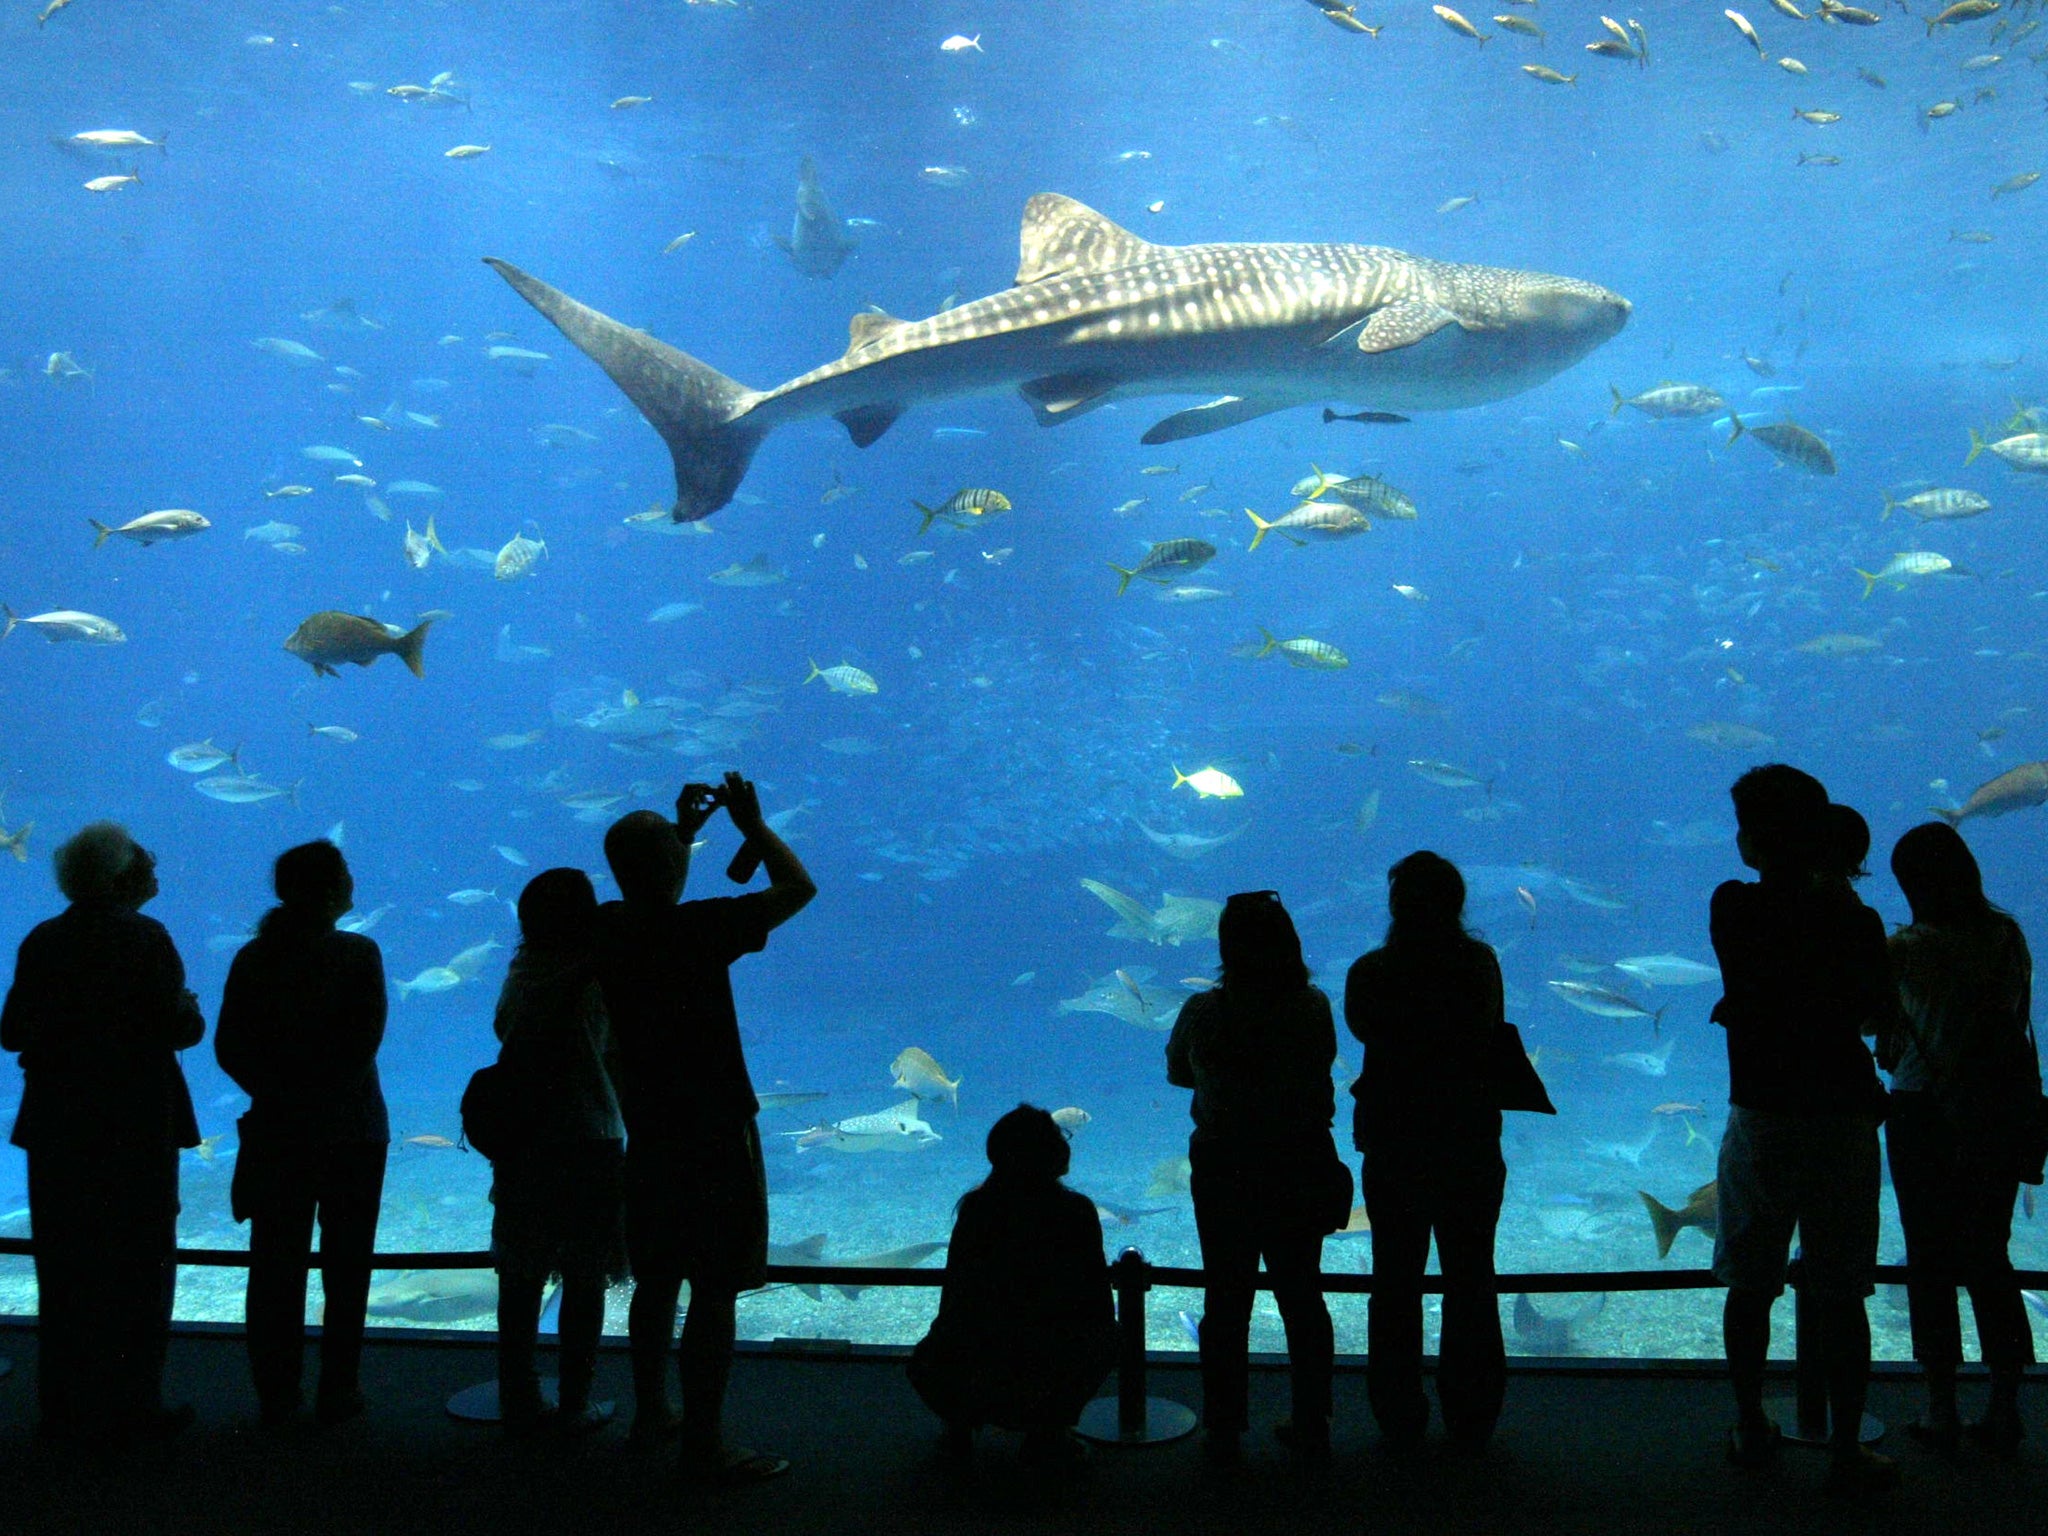 An aquarium in Okinawa, Japan